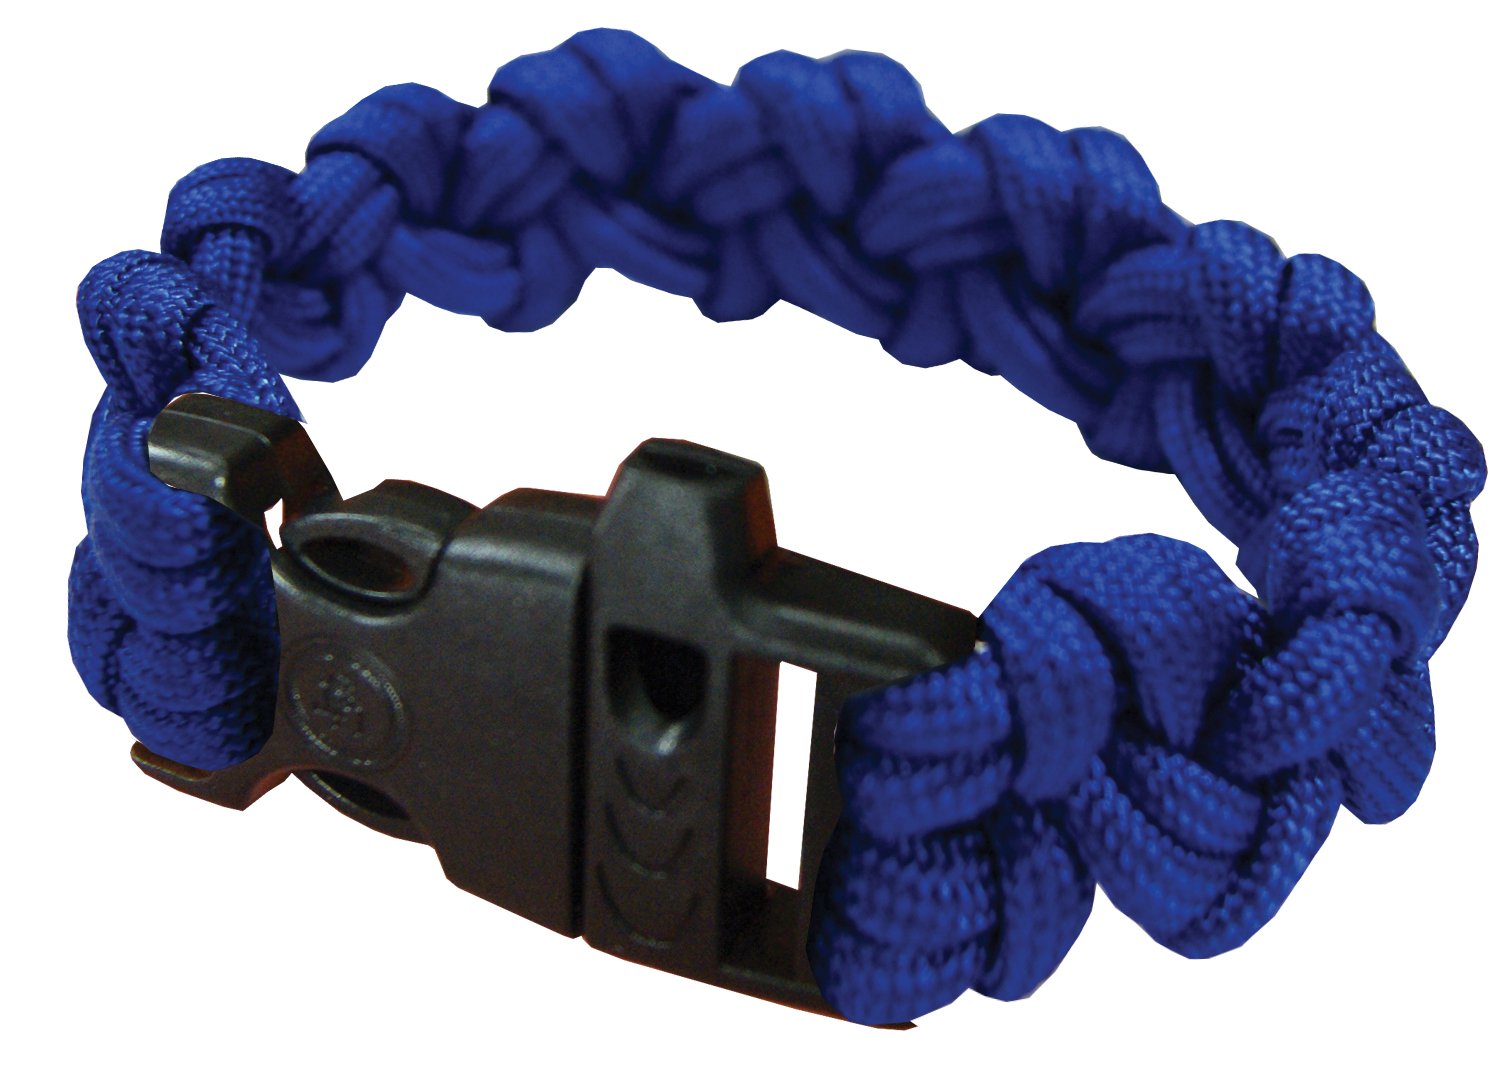 ust para 550 Whistle Bracelet, Blue